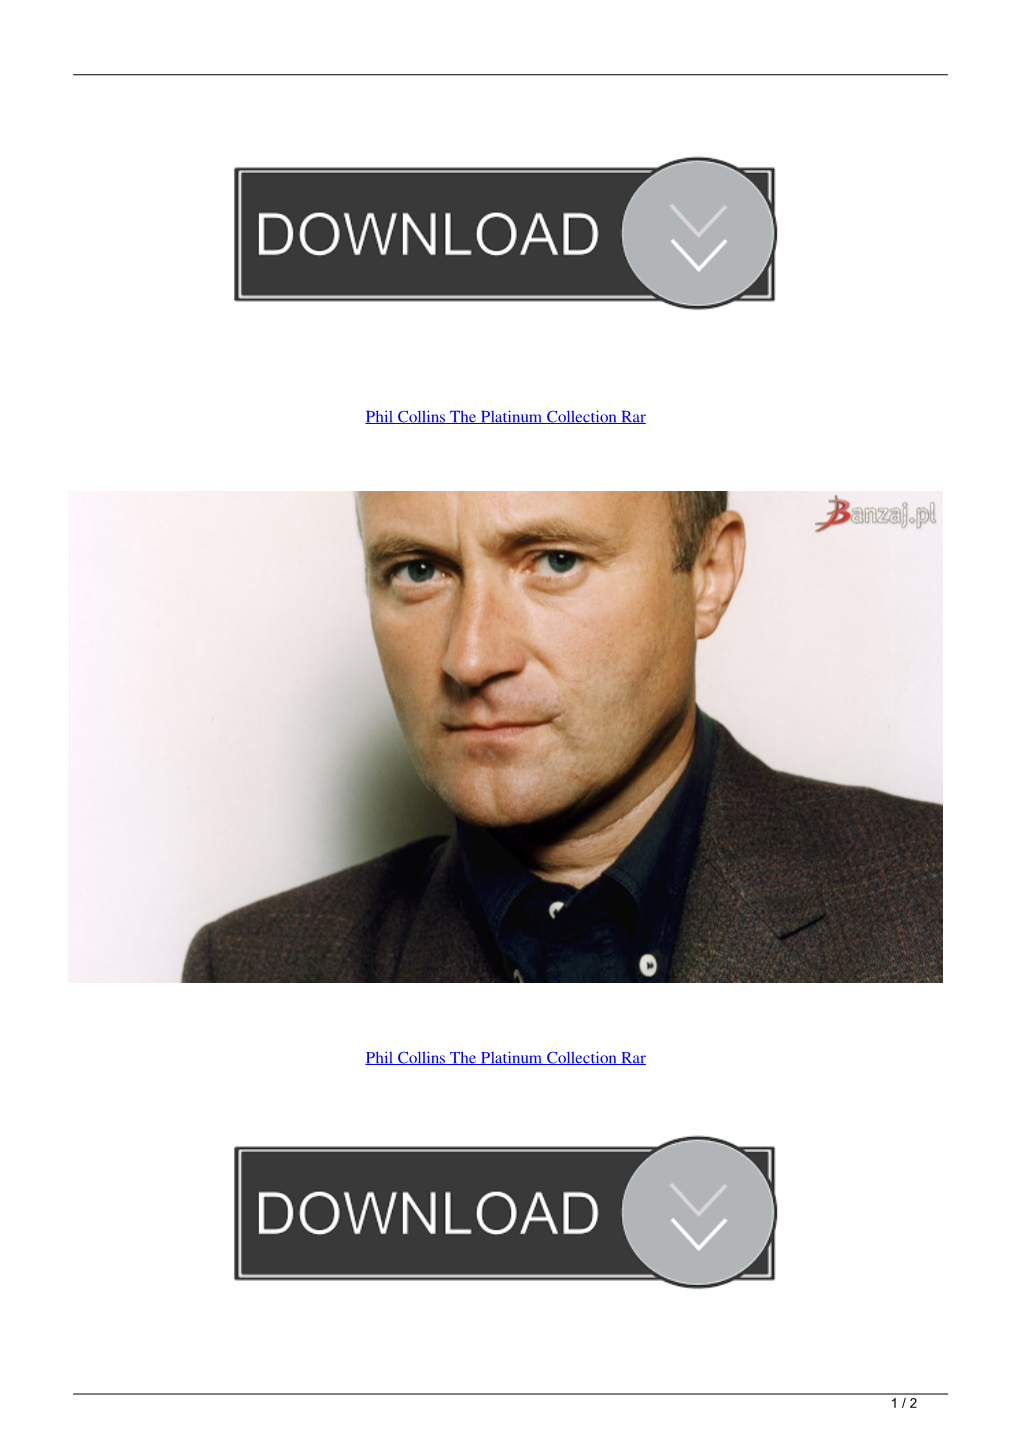 Phil Collins the Platinum Collection Rar